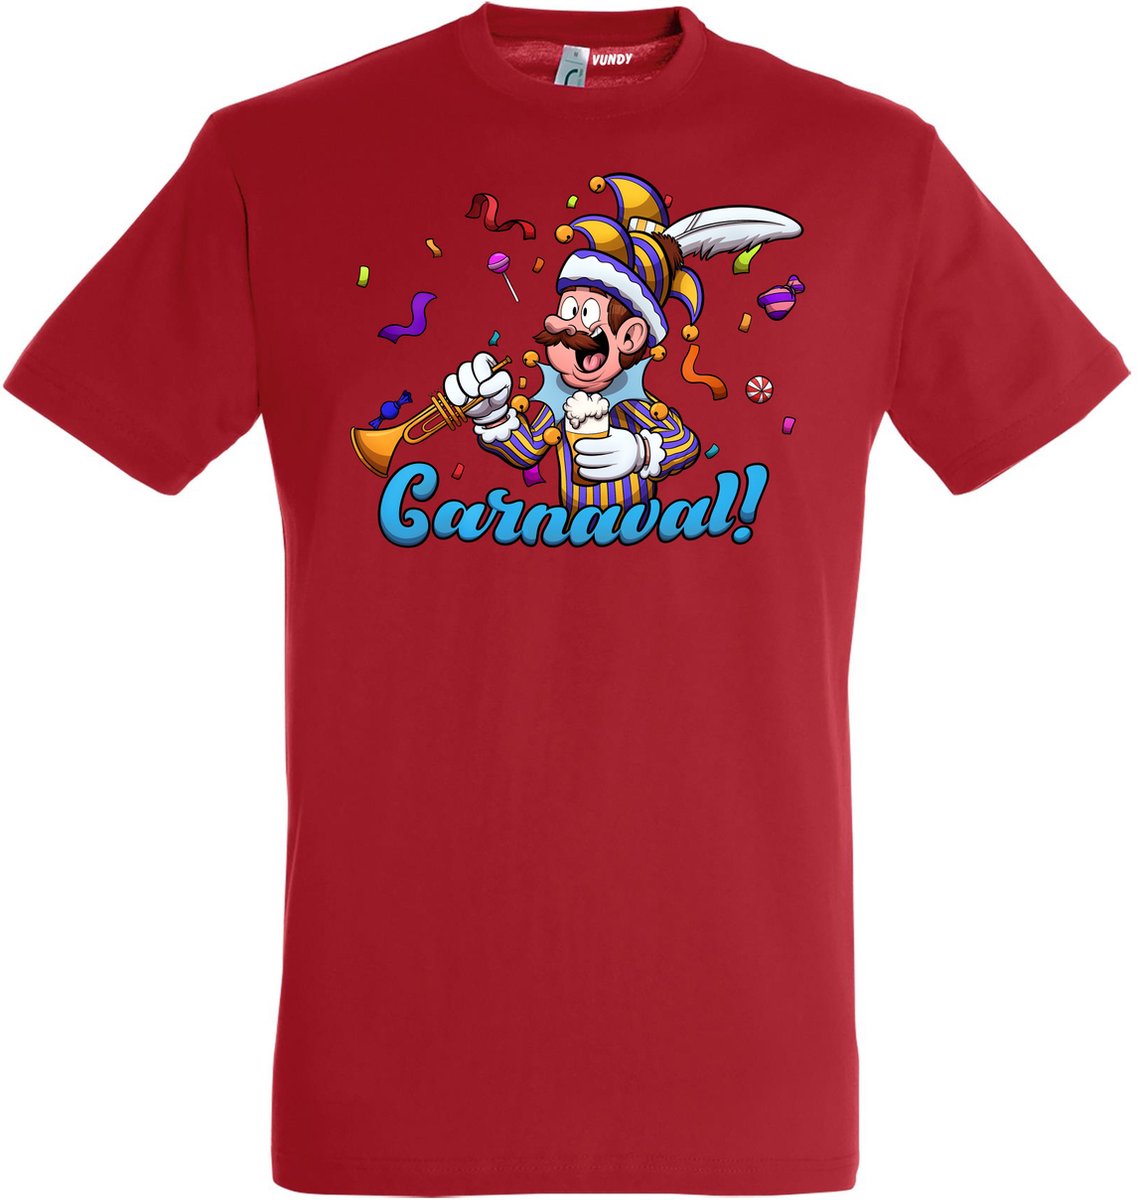 T-shirt kinderen Carnavalluh | Carnaval | Carnavalskleding Kinderen Baby | Rood | maat 80